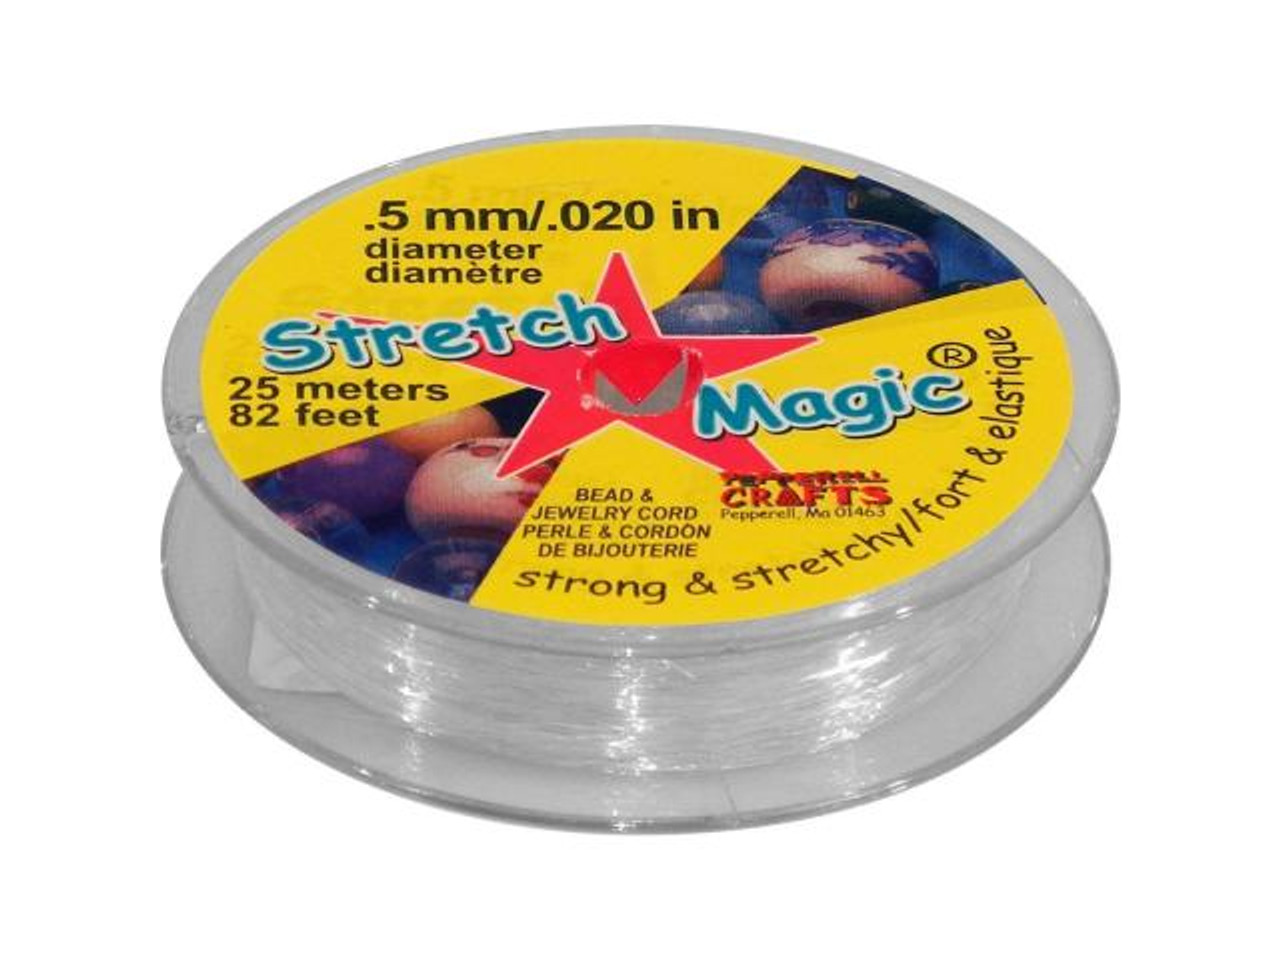 Pepperell Stretch Magic - Clear